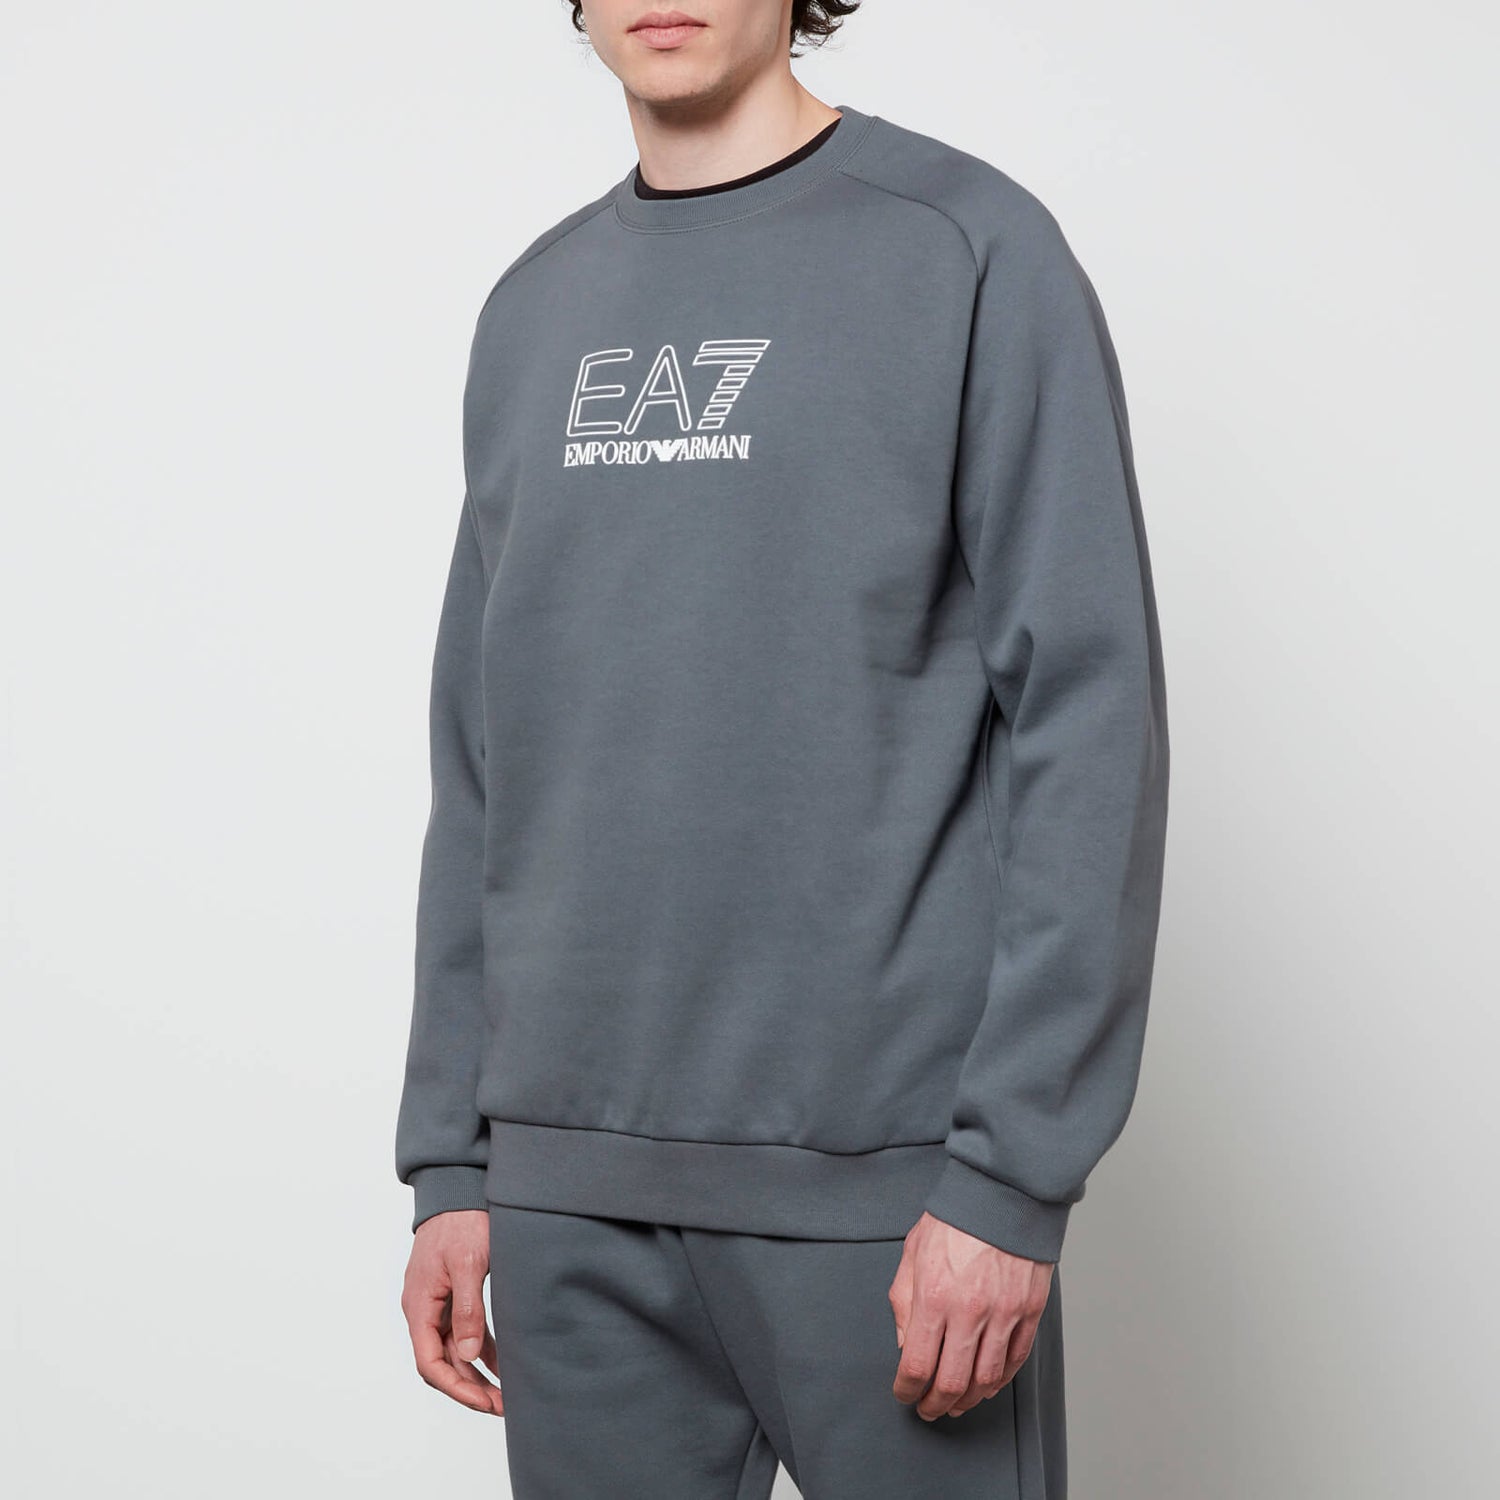 EA7 Men's Visability Fleece Sweatshirt - Iron Gate - S